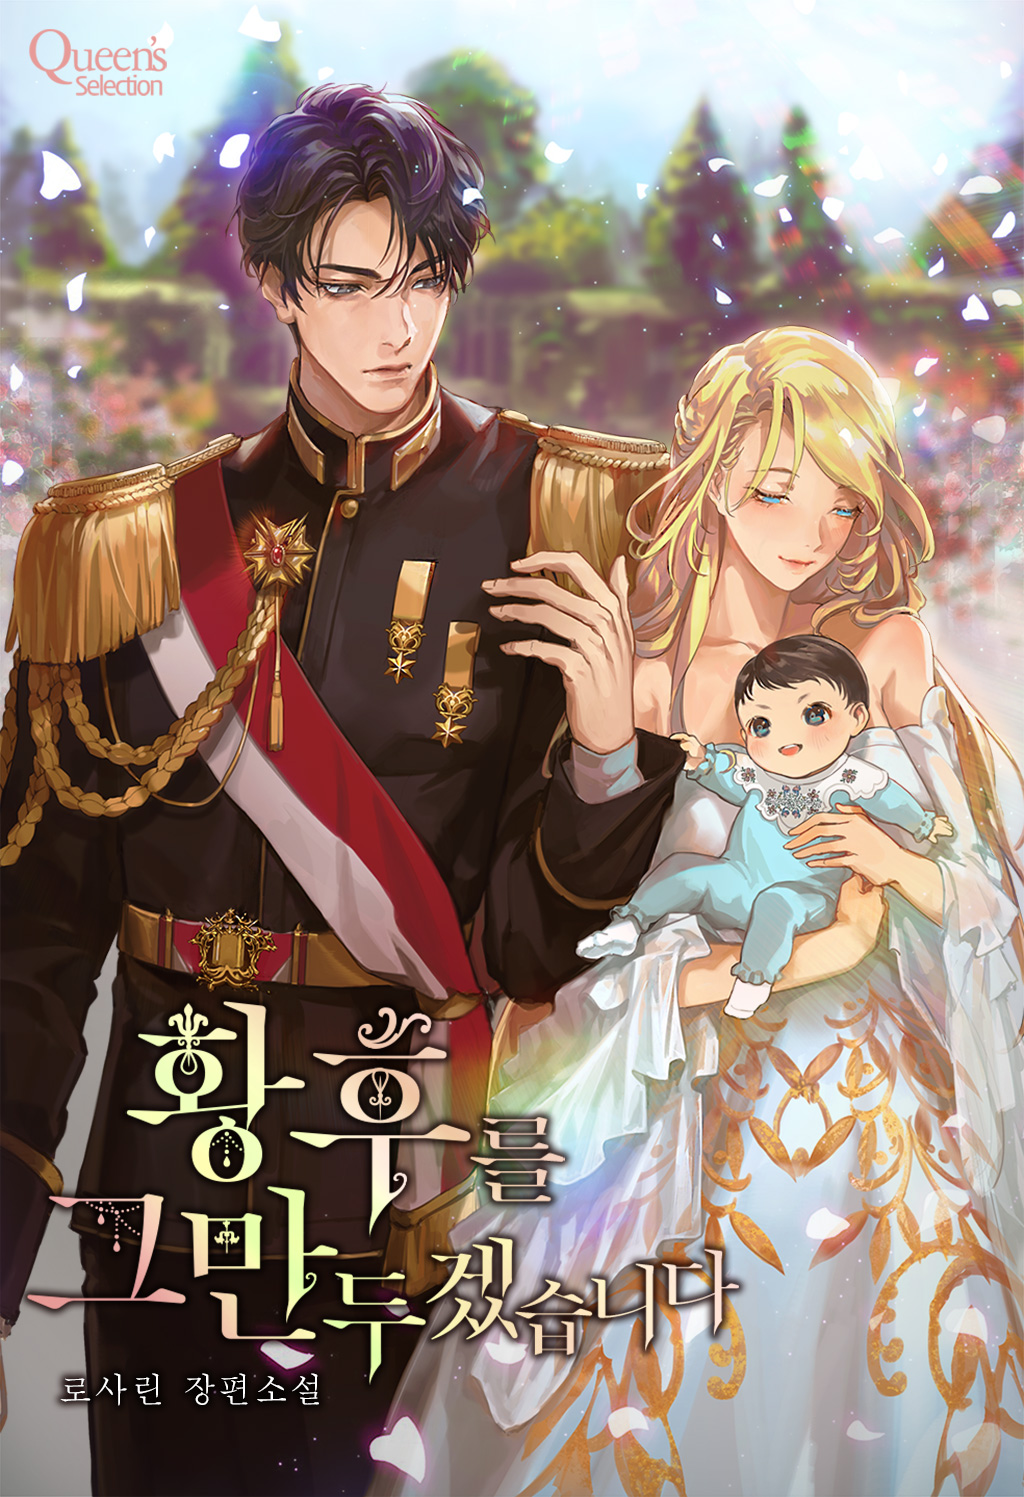 The Immortal Emperor Returns - Novel Updates